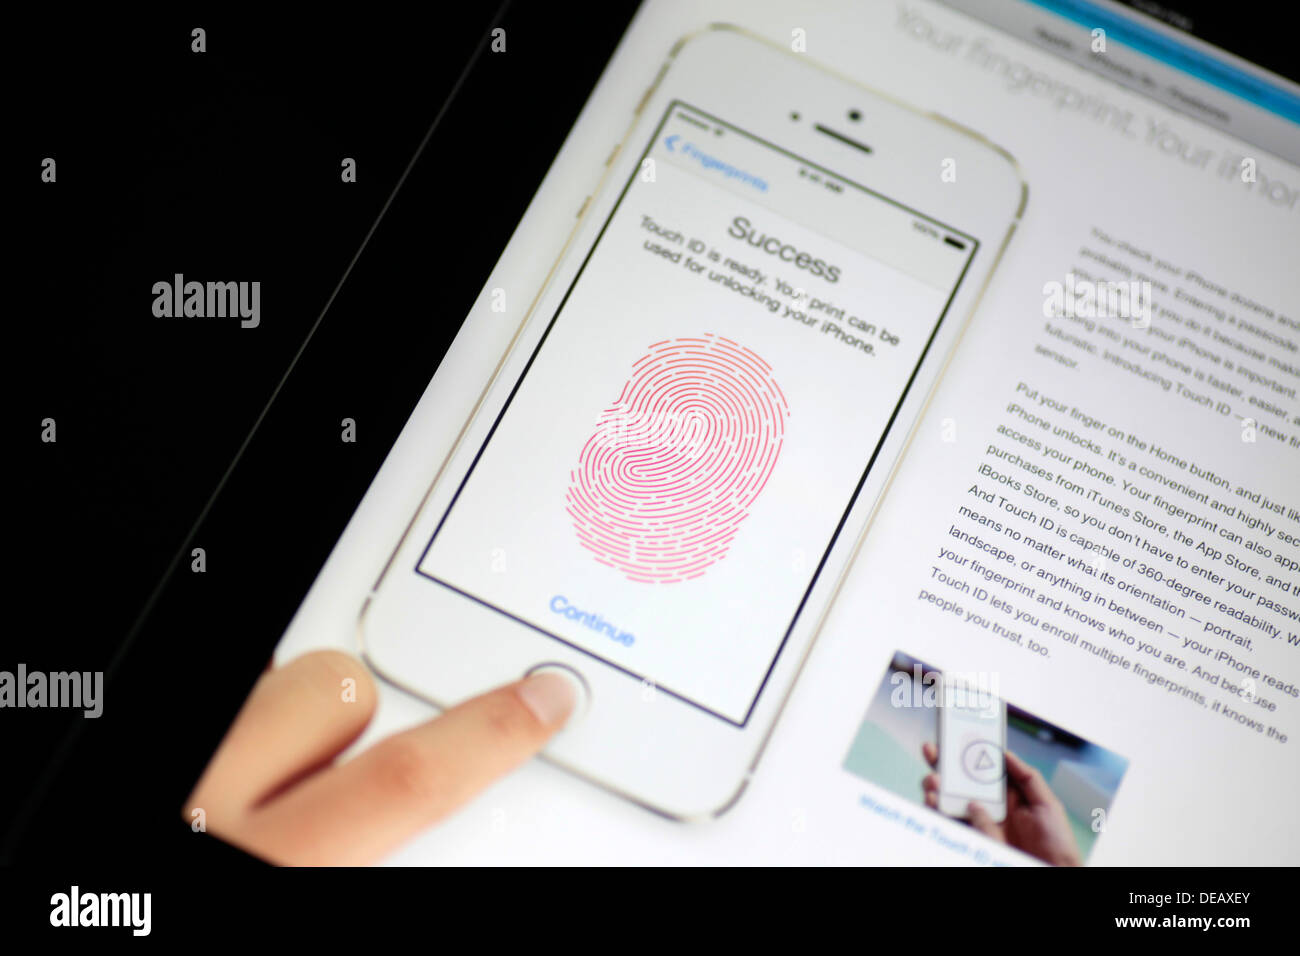 iPhone 5s web-page displayed in an Apple iPad Stock Photo